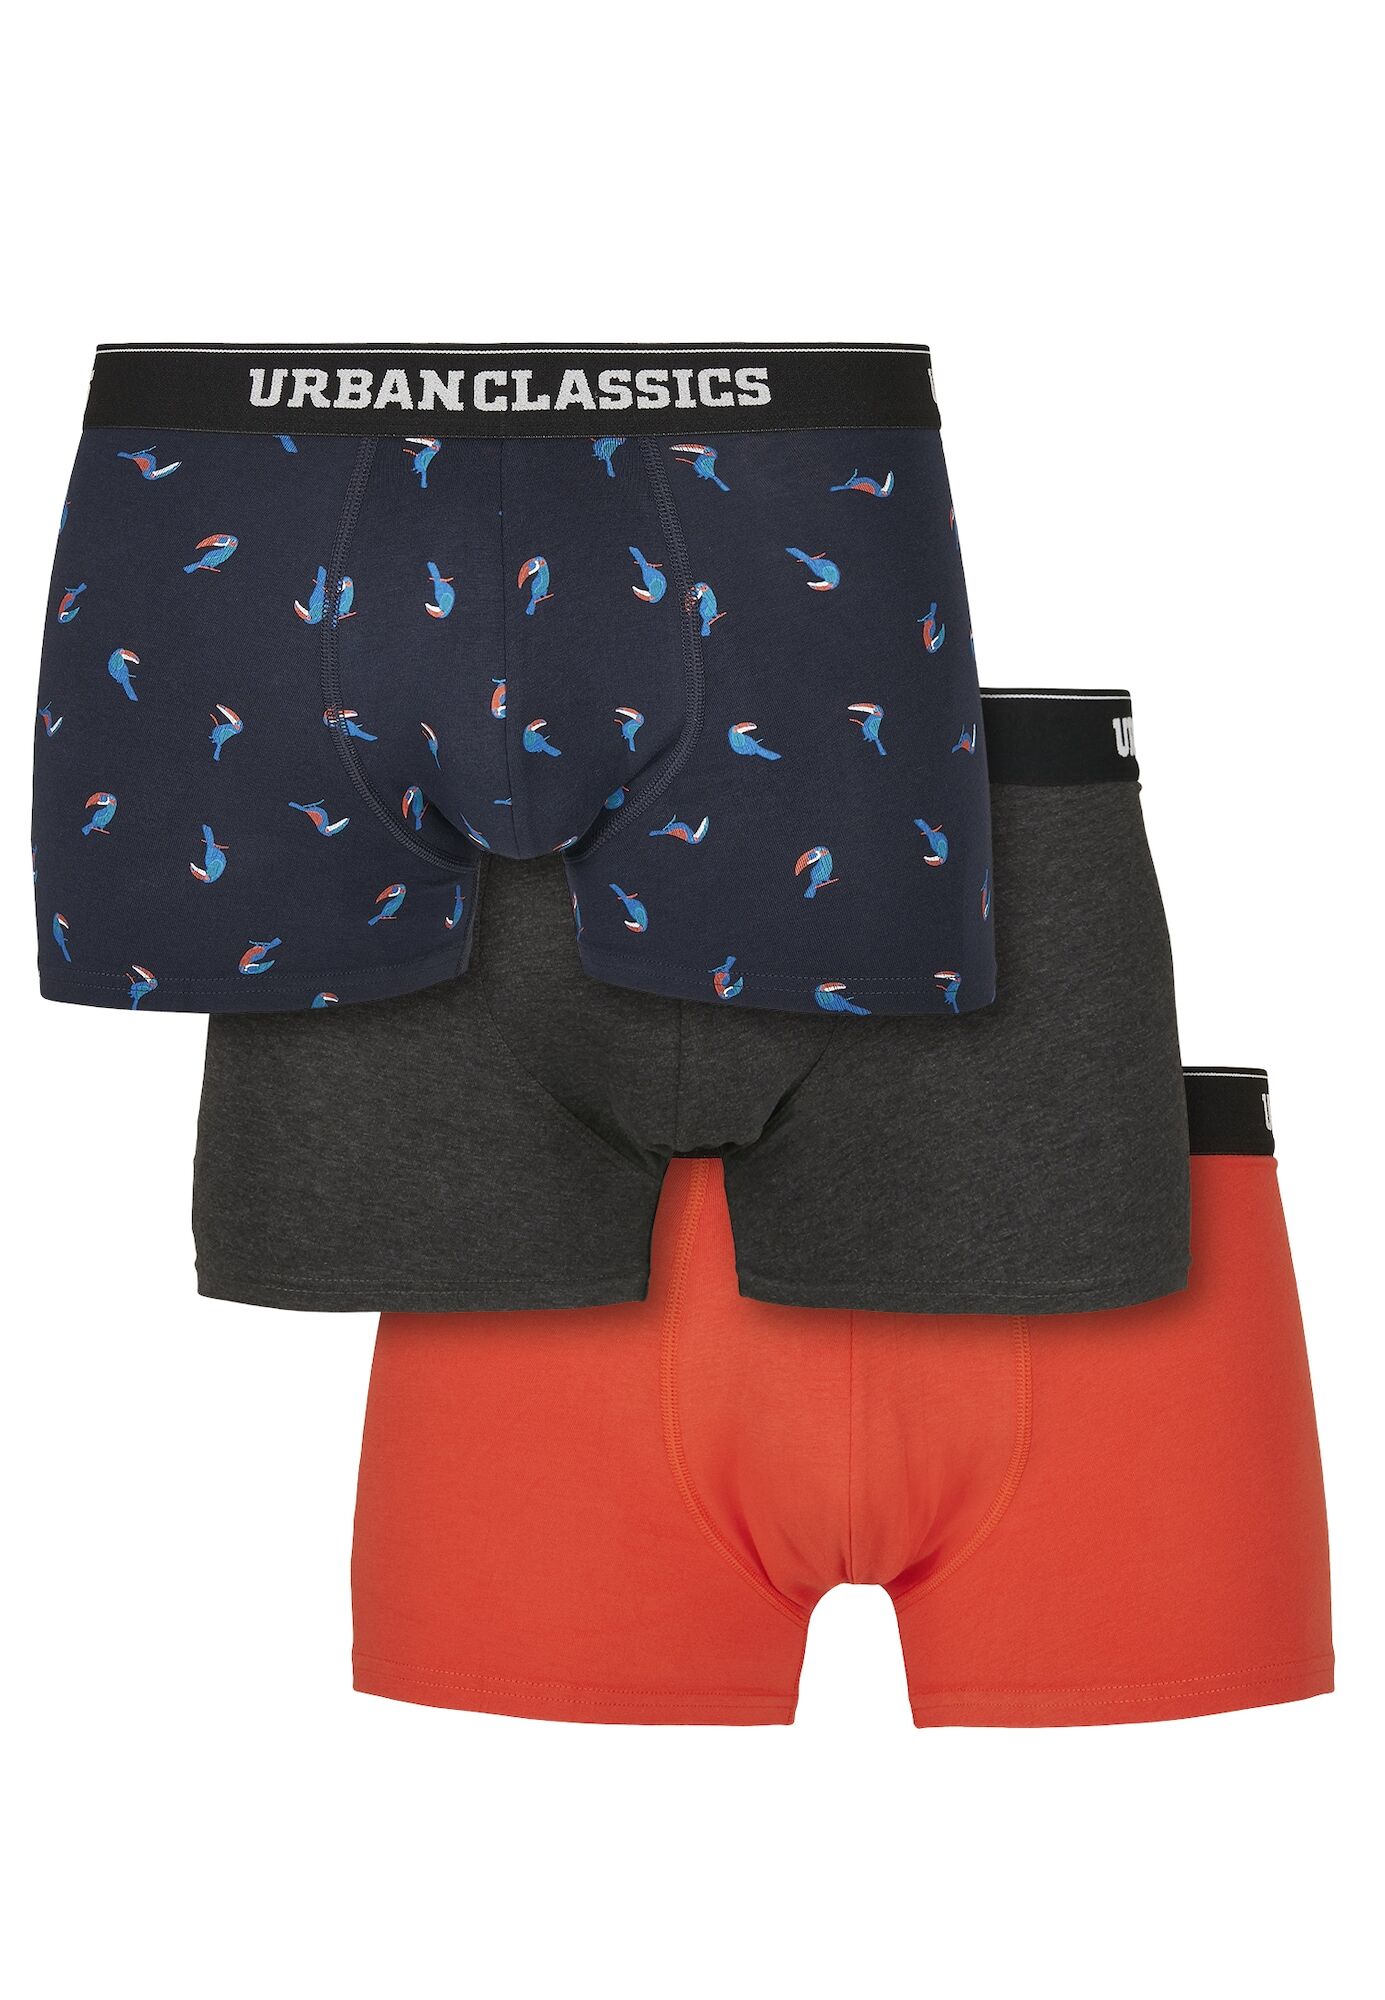 Urban Classics Big & Tall Boxer Blu, Nero, Arancione